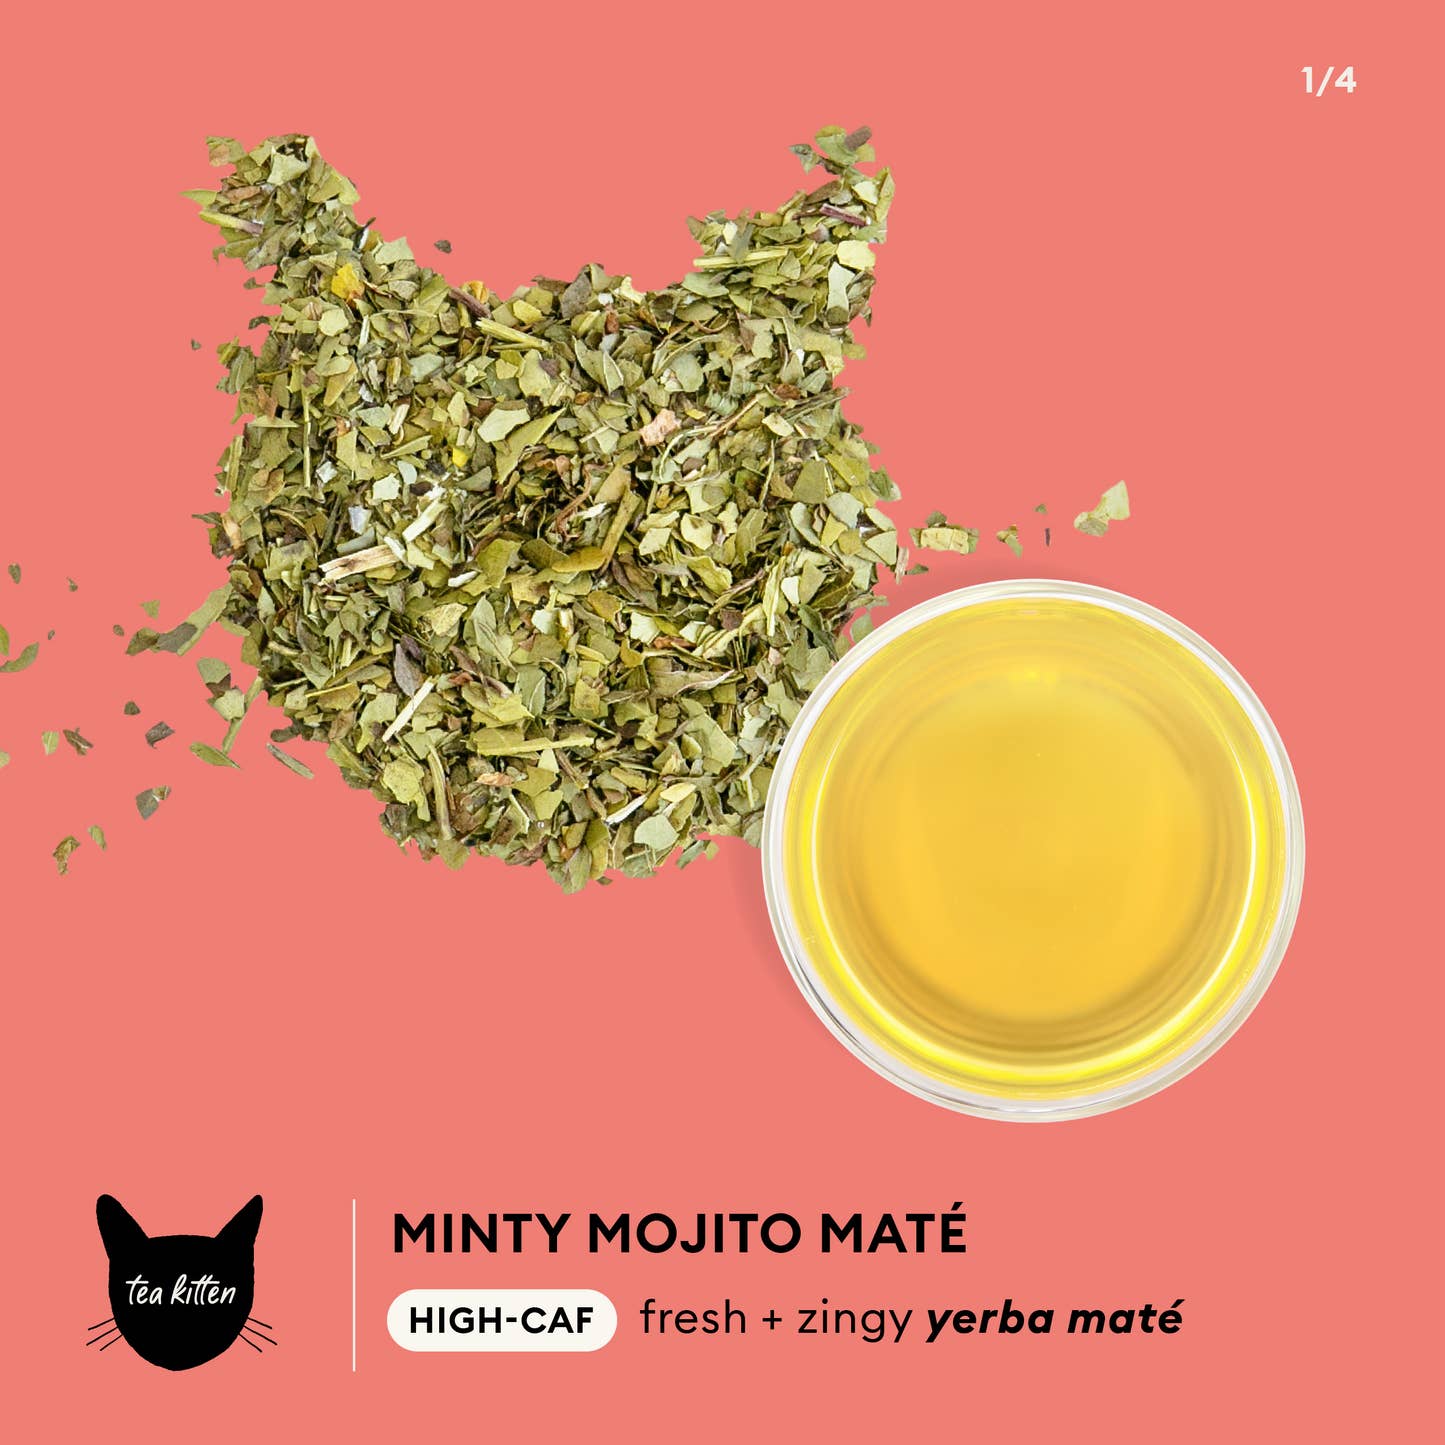 Tea Kitten - Minty Mojito Mate Infographic High-Caf fresh + zingy yerba mate